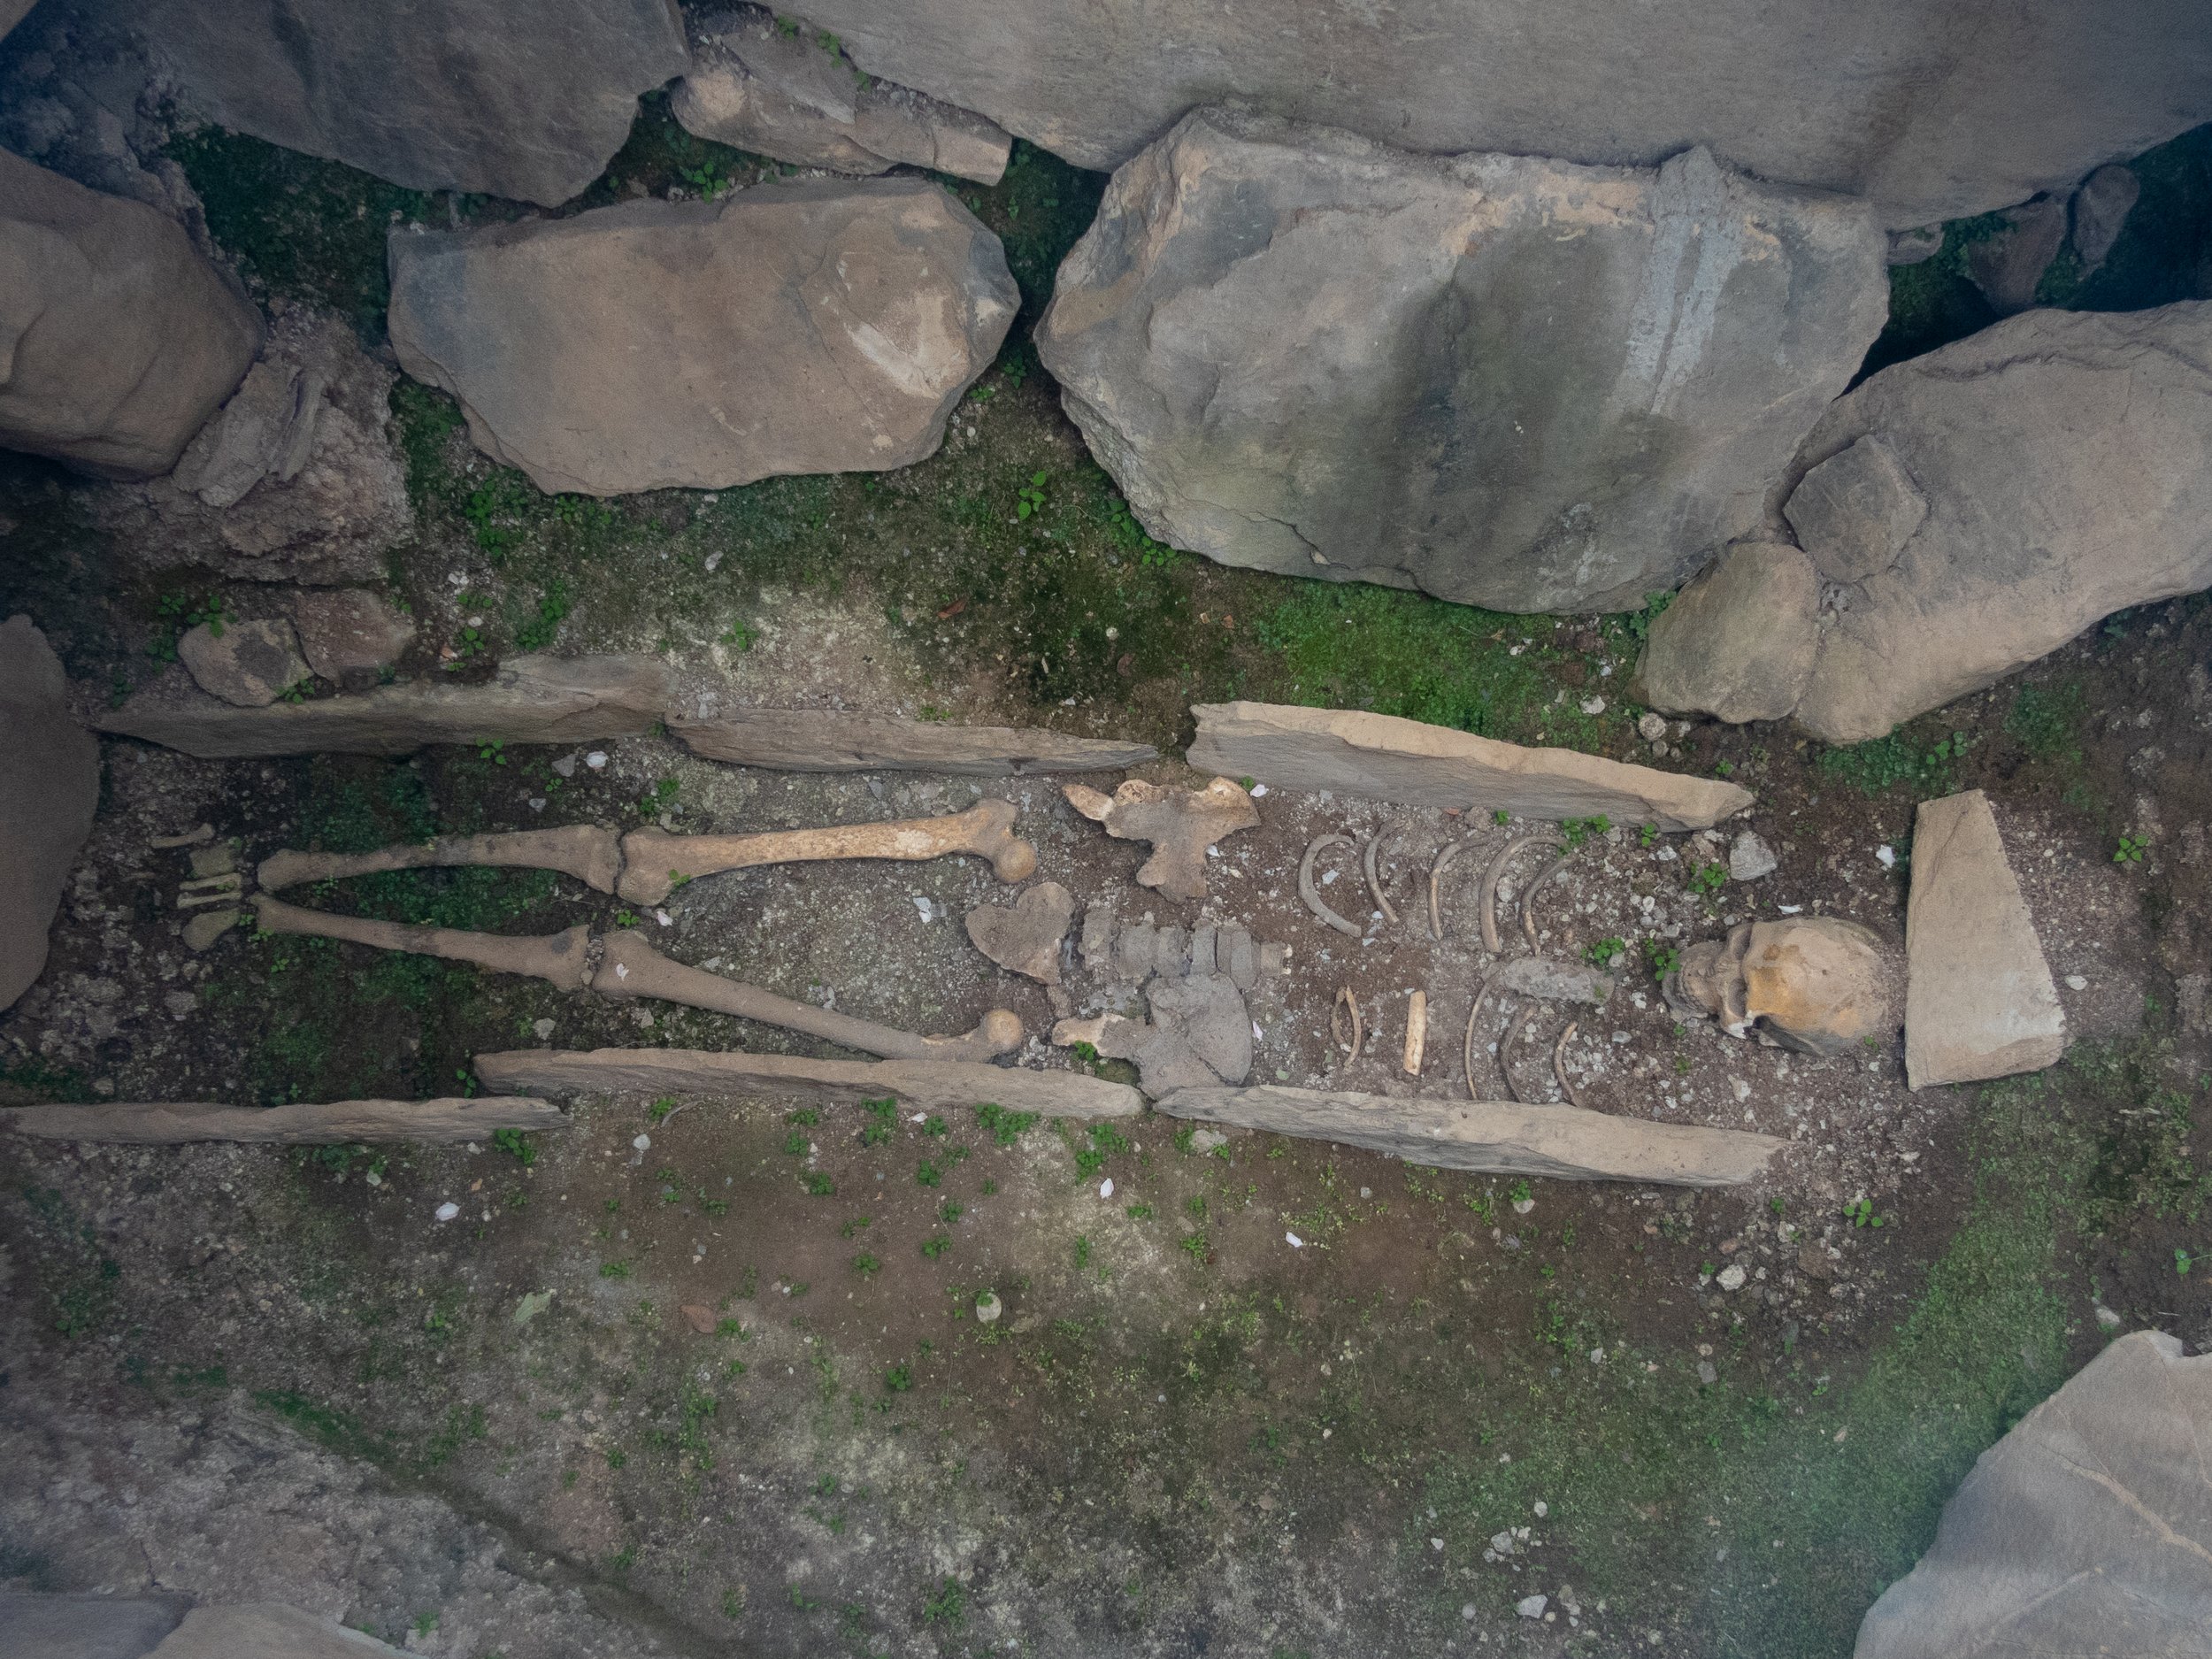 Skeleton (note long leg bones), Albanian Church, Kish, Azerbaijan